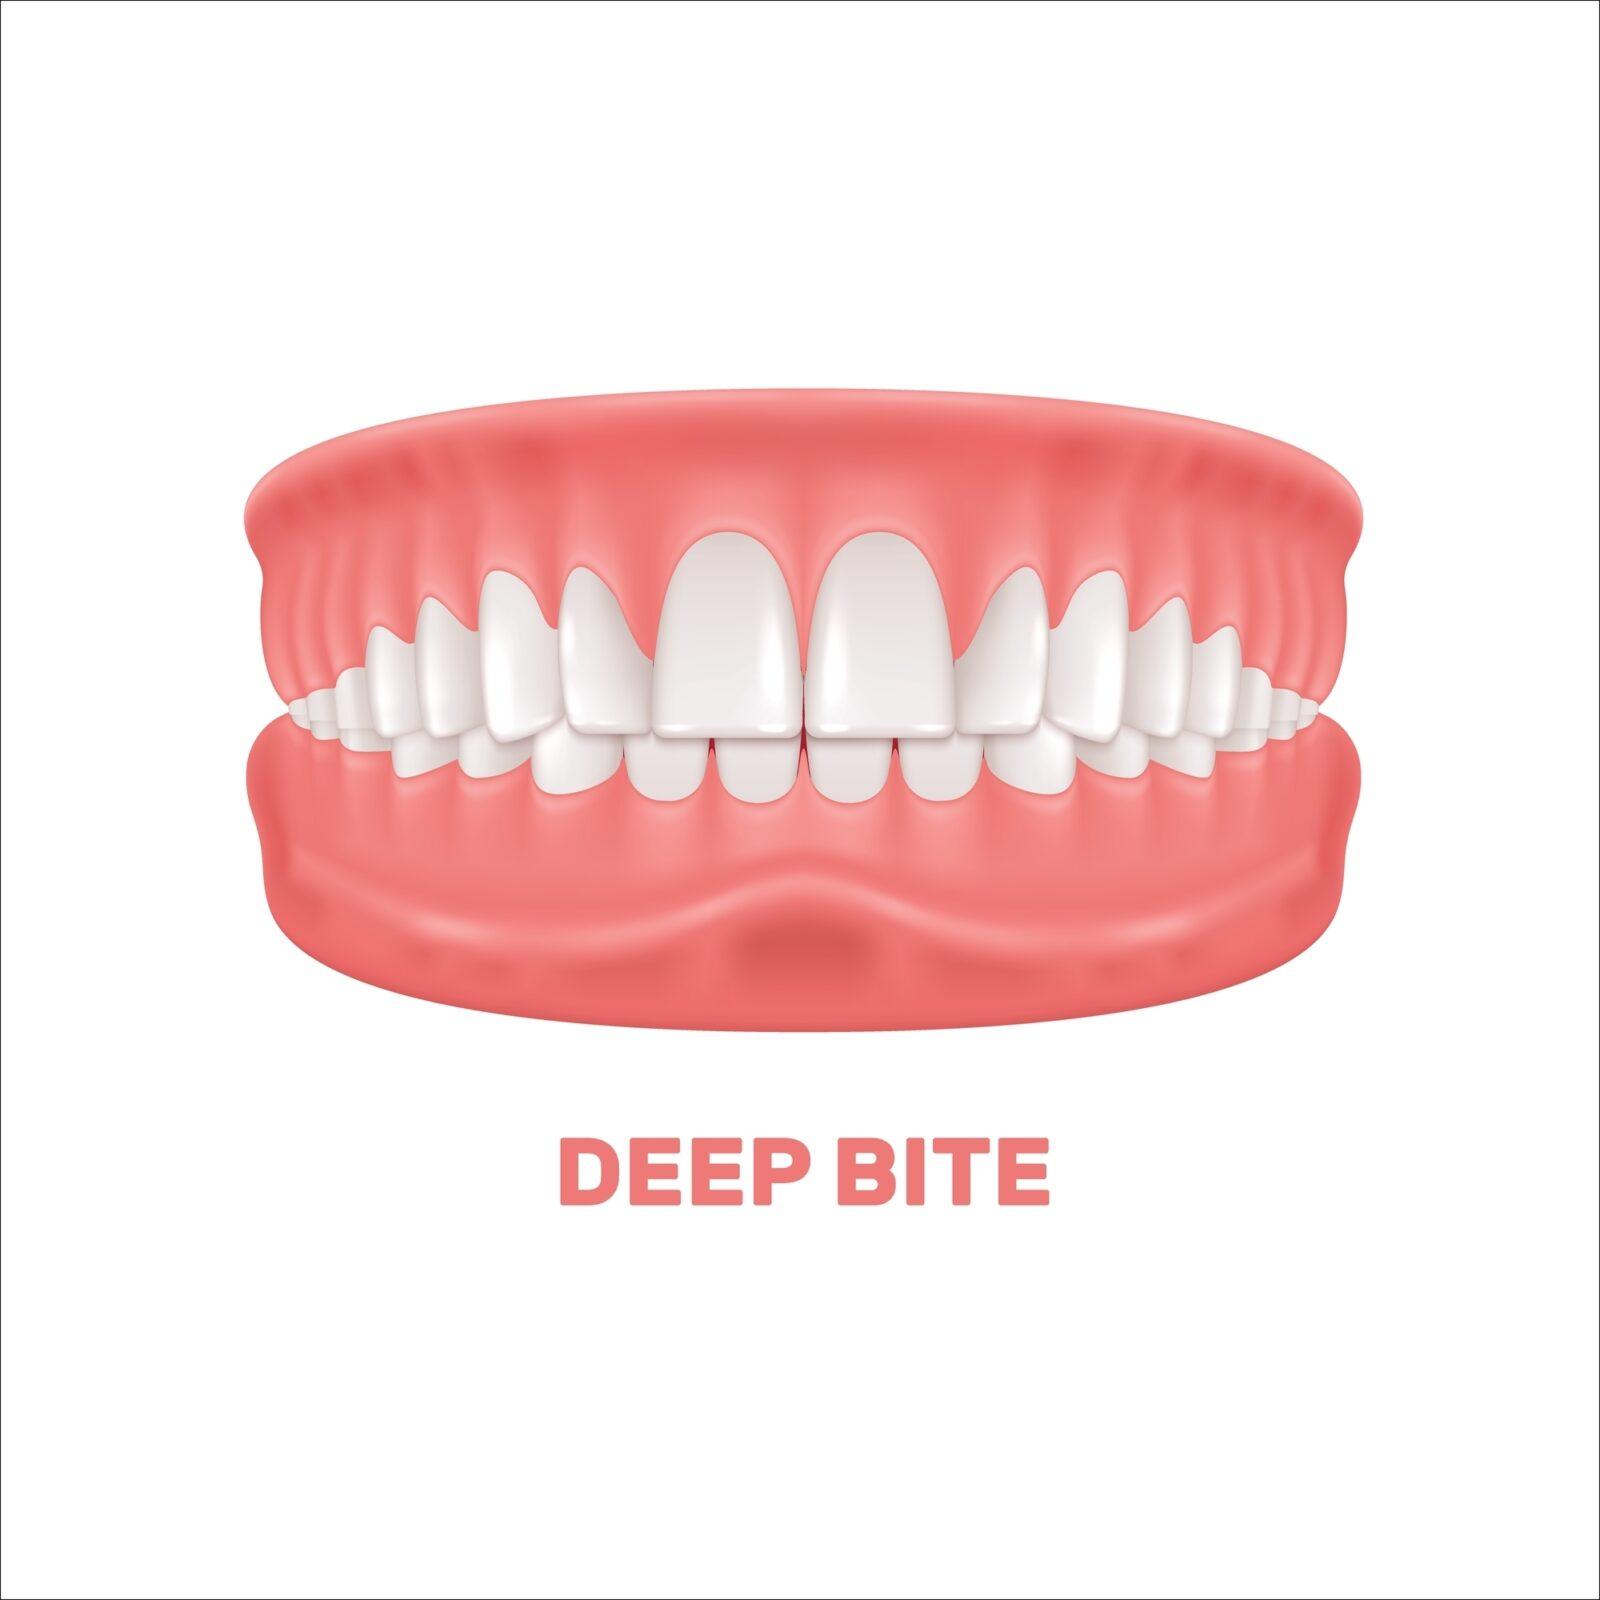 deep bite illustration